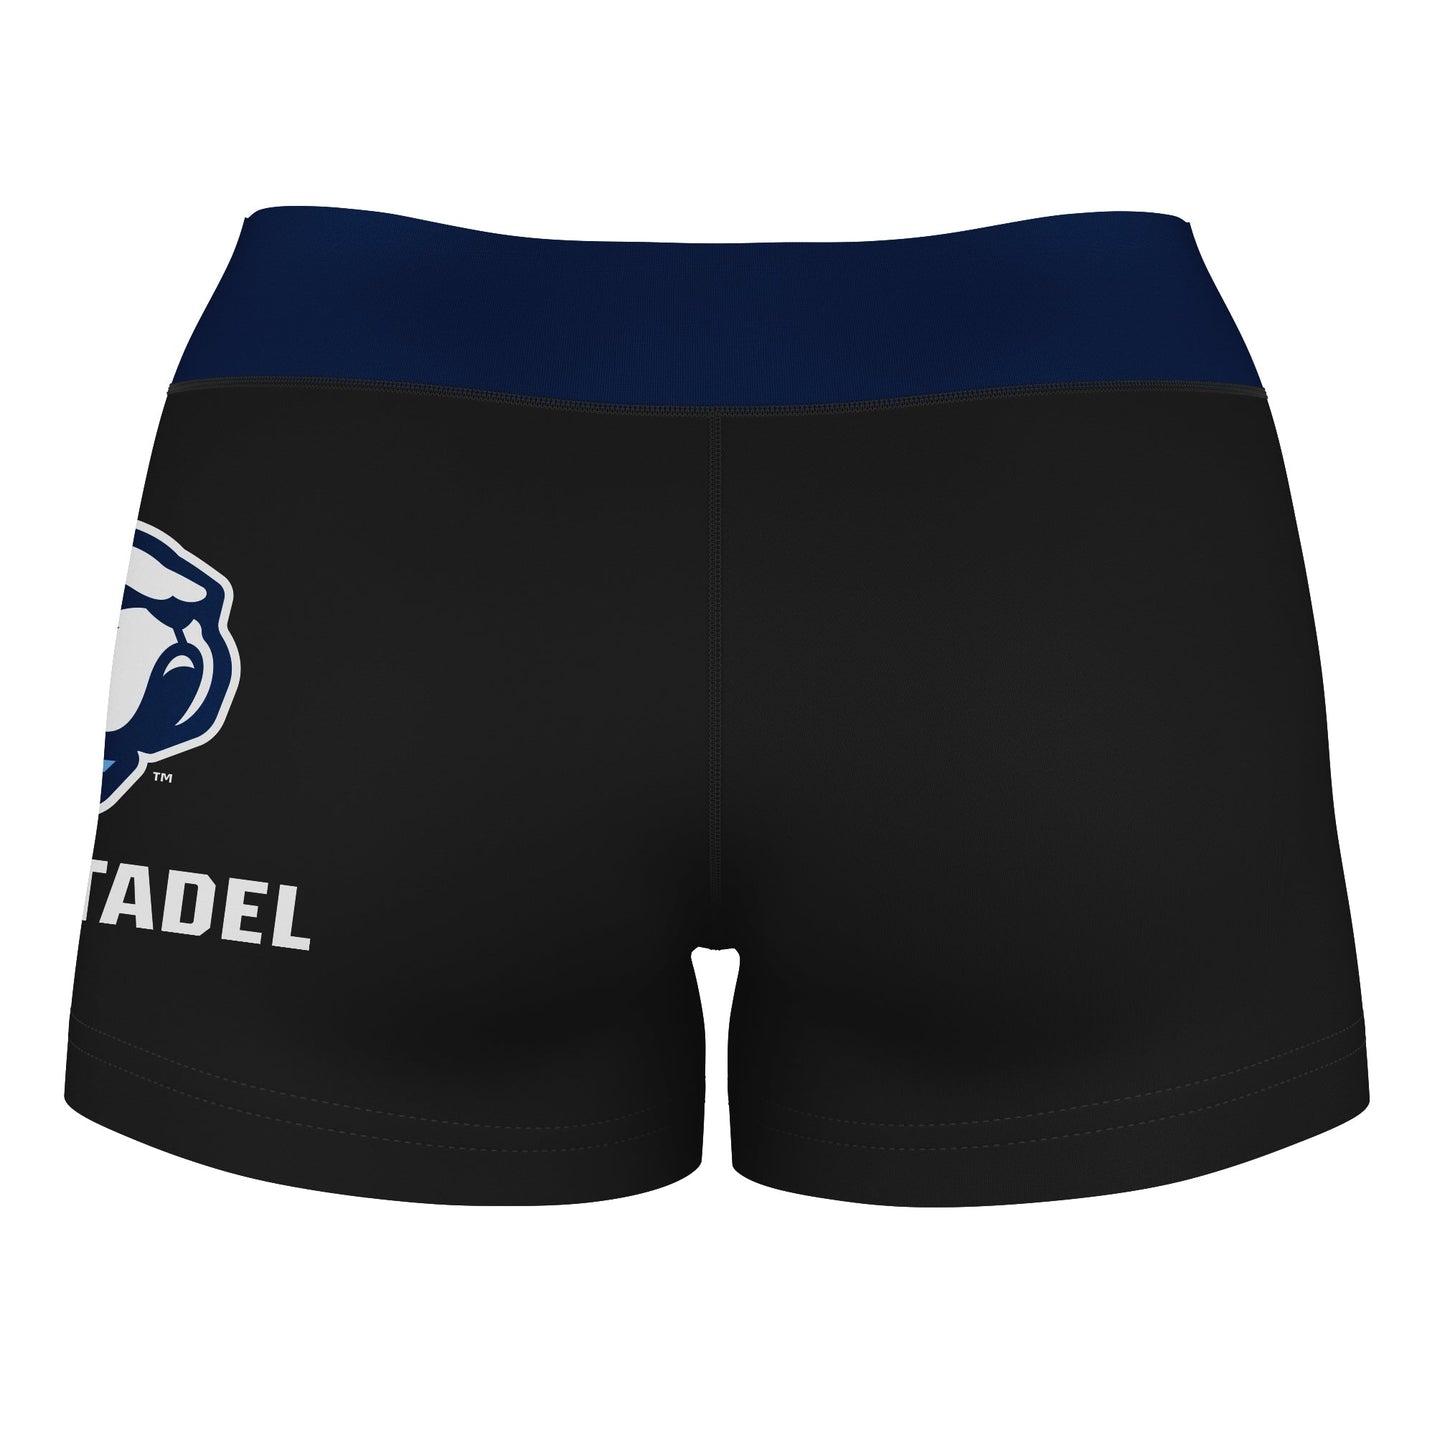 Citadel Bulldogs Vive La Fete Logo on Thigh & Waistband Black & Blue Women Yoga Booty Workout Shorts 3.75 Inseam - Vive La F̻te - Online Apparel Store